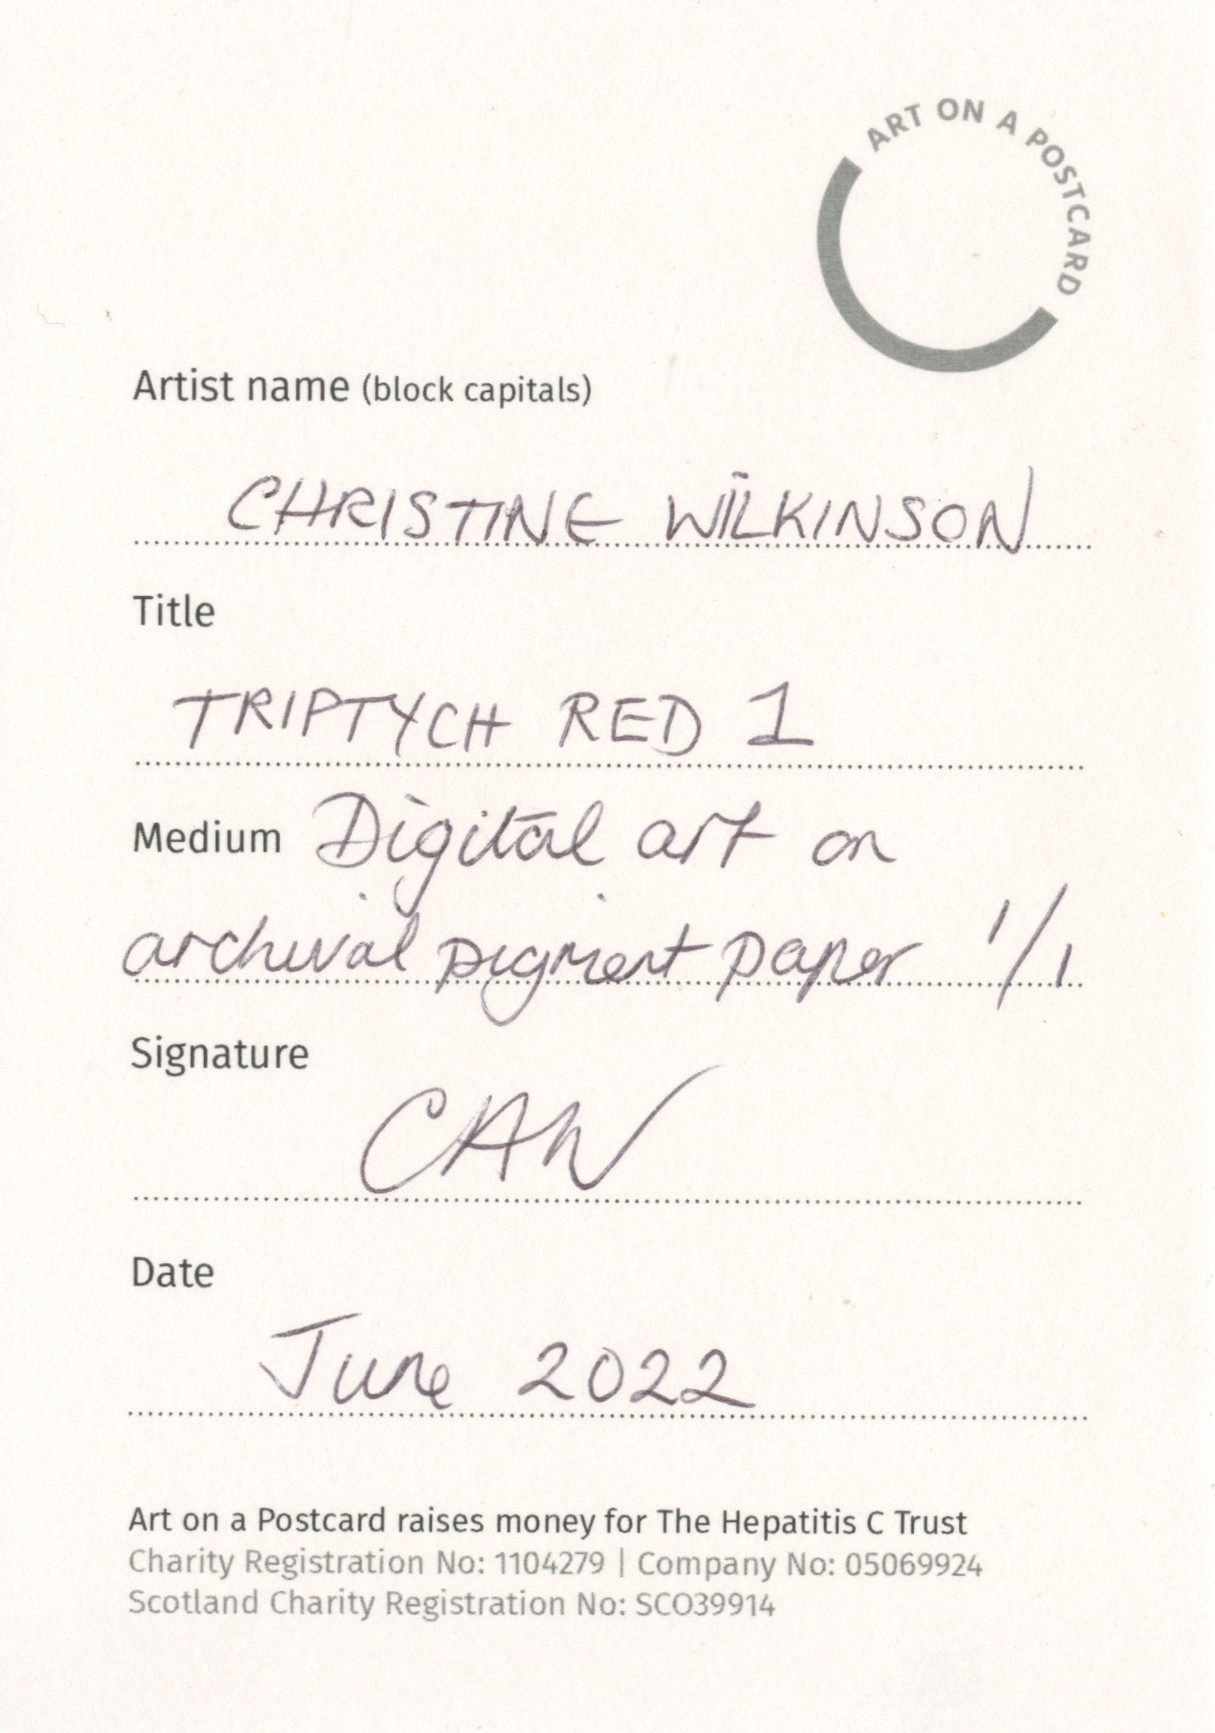 32. Christine Wilkinson - Triptych Red 1 - BACK